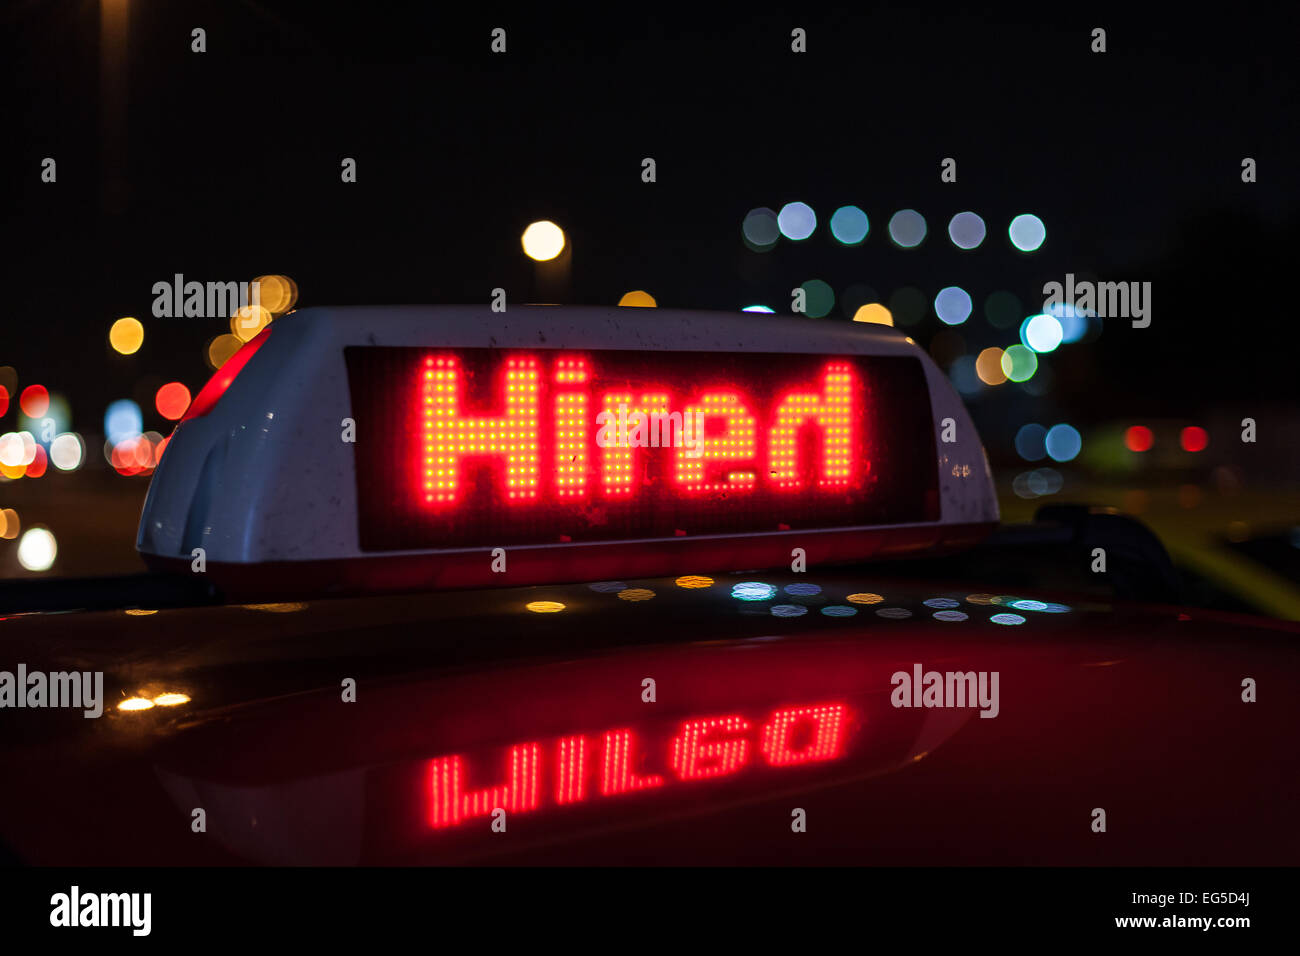 Hired taxi sign illuminated at night Stock Photo